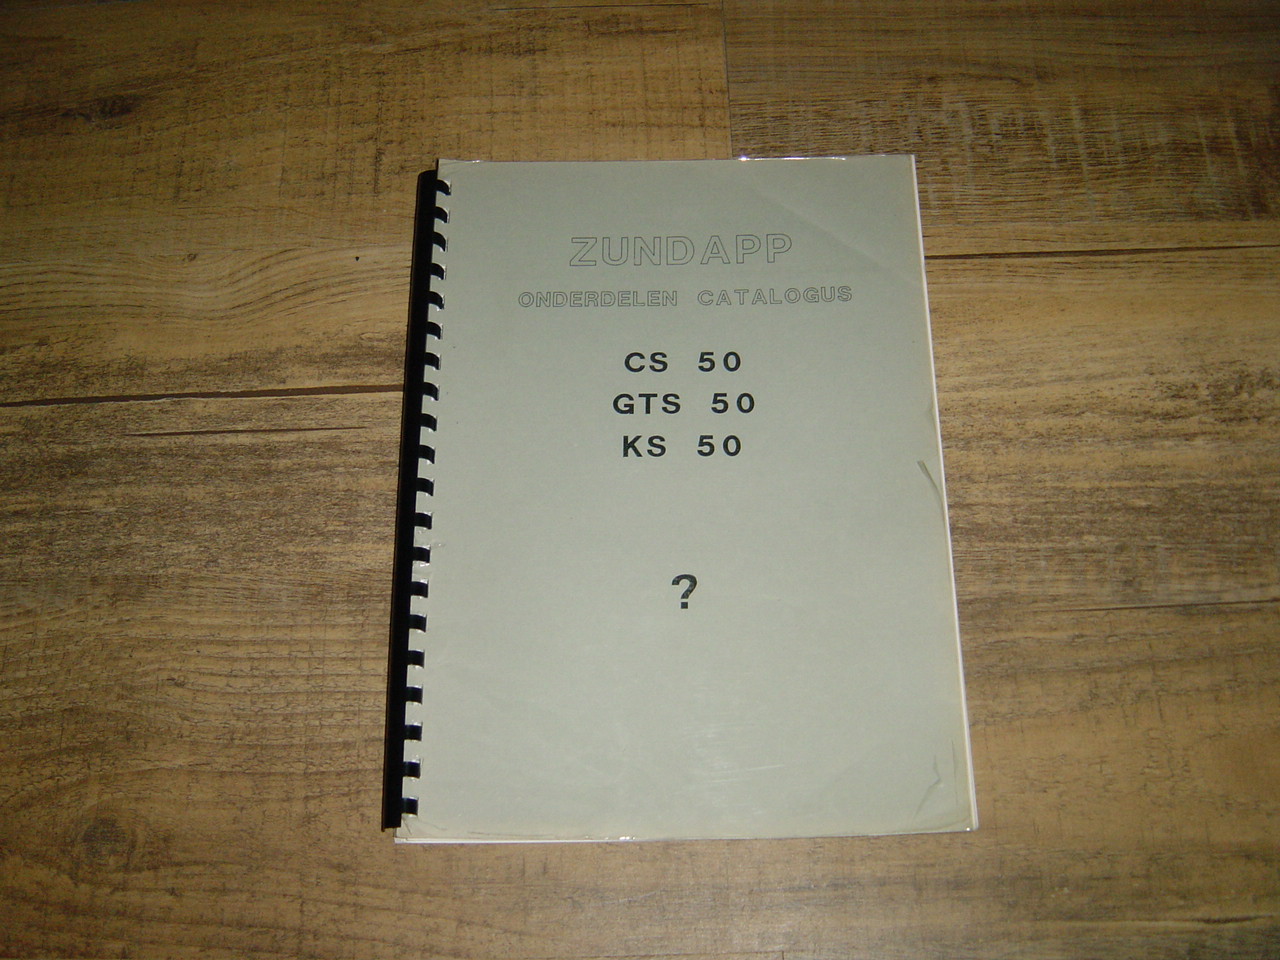 Onderdelen catalogus NL - 529 Copy